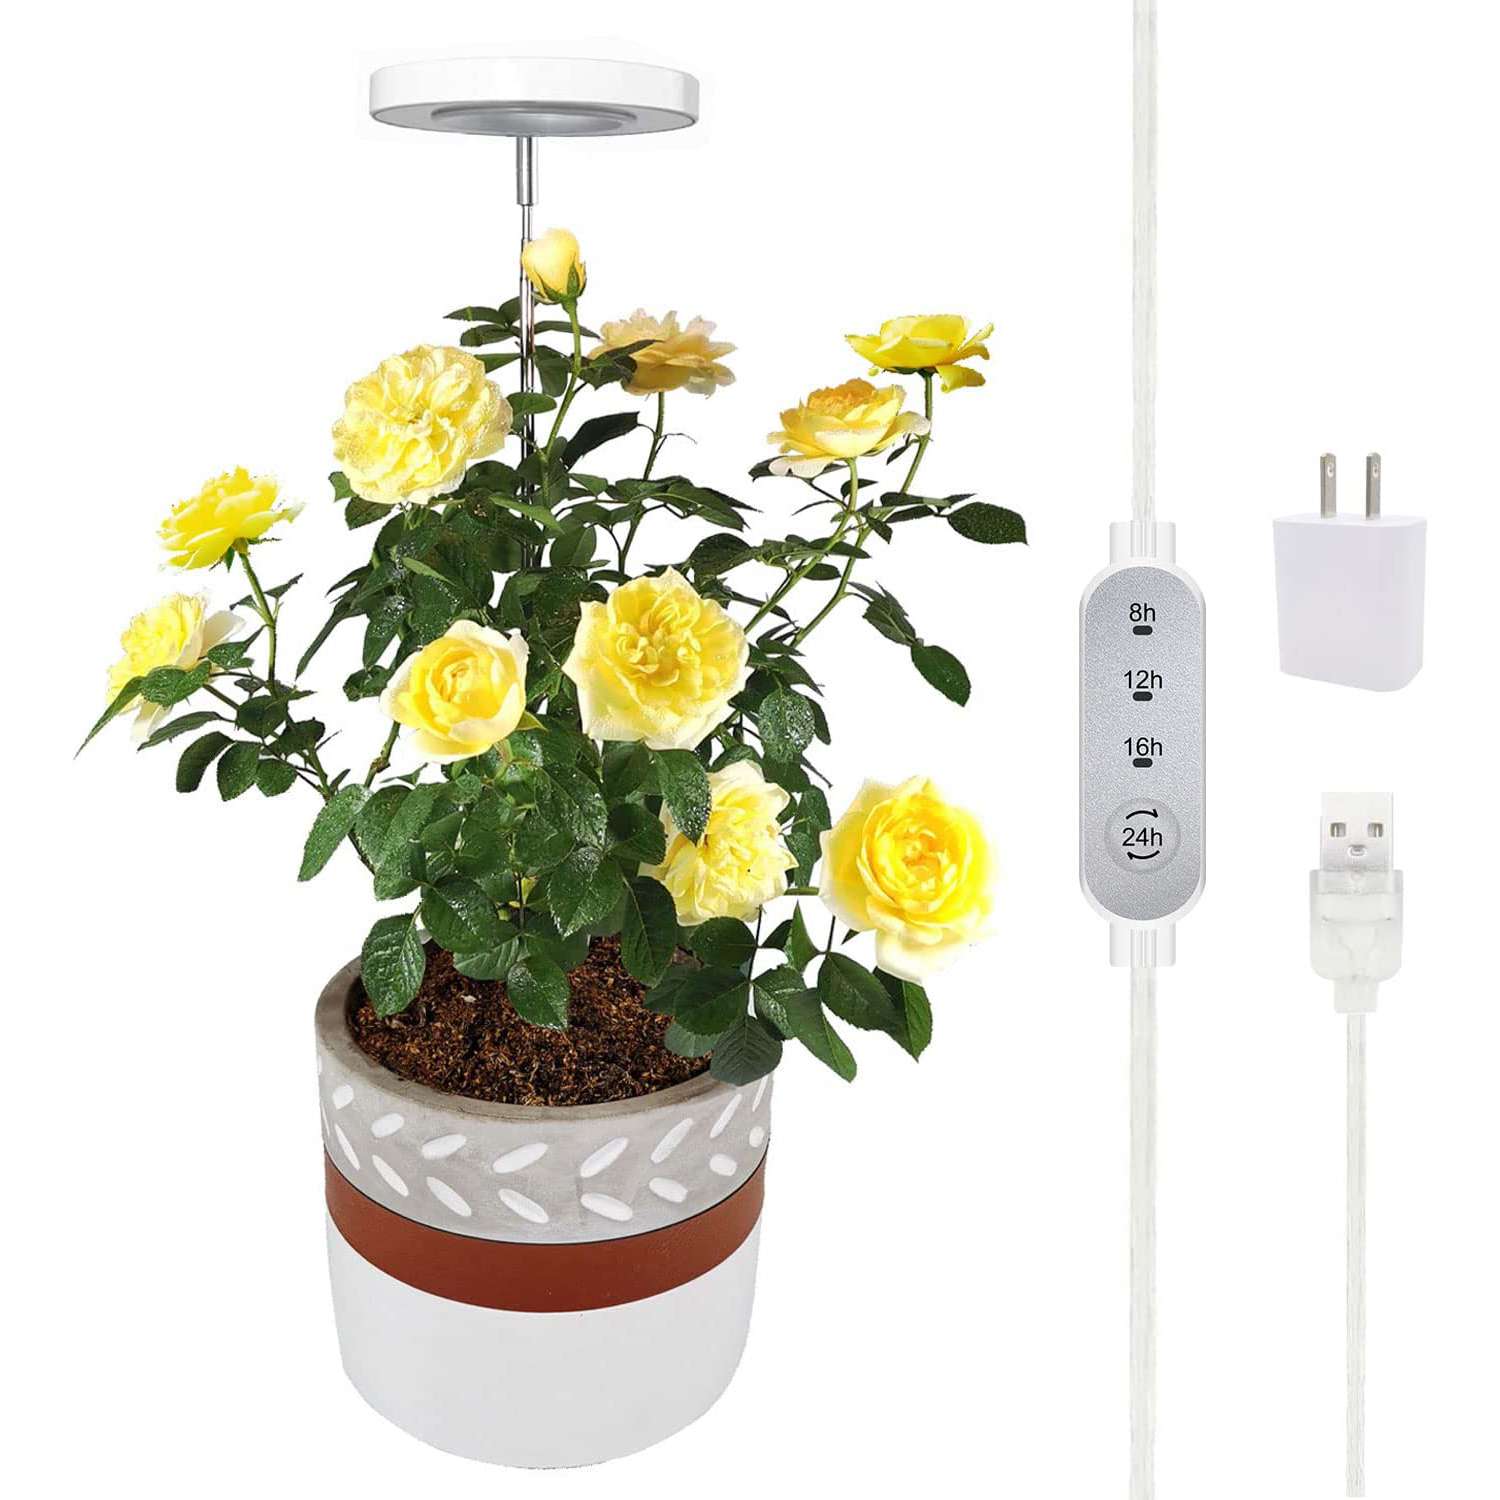 Plant Grow Light,Yadoker LED Growing Light Full Spectrum for Indoor Plants